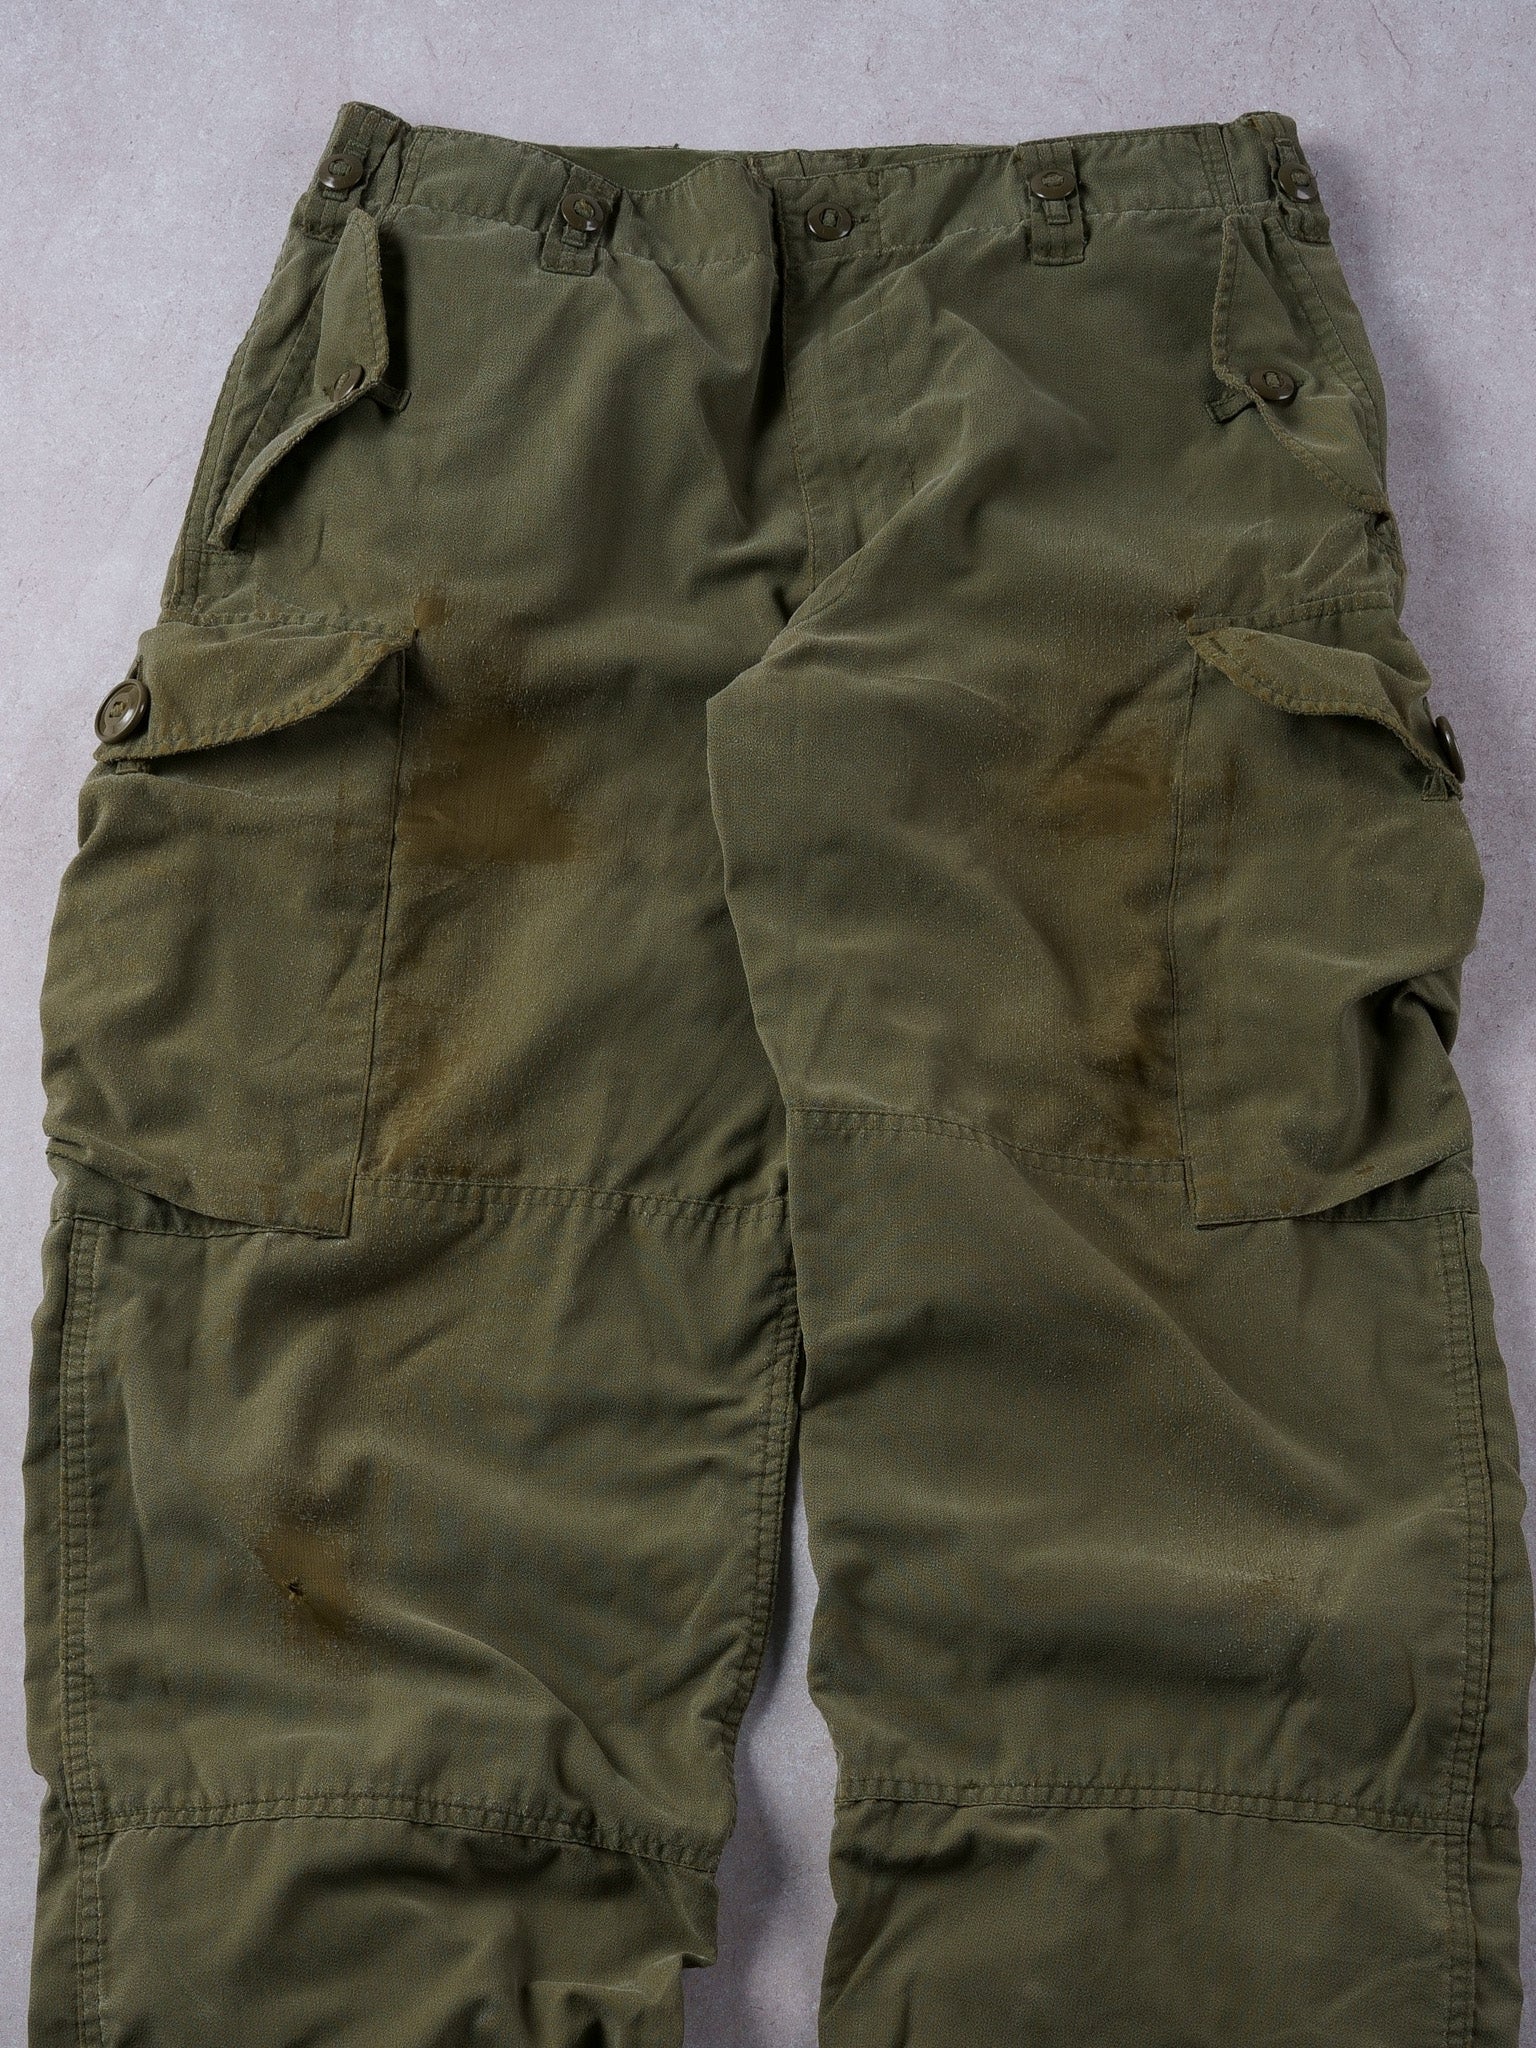 Vintage 90s Army Green Parachute Cargo Pants (32x28)